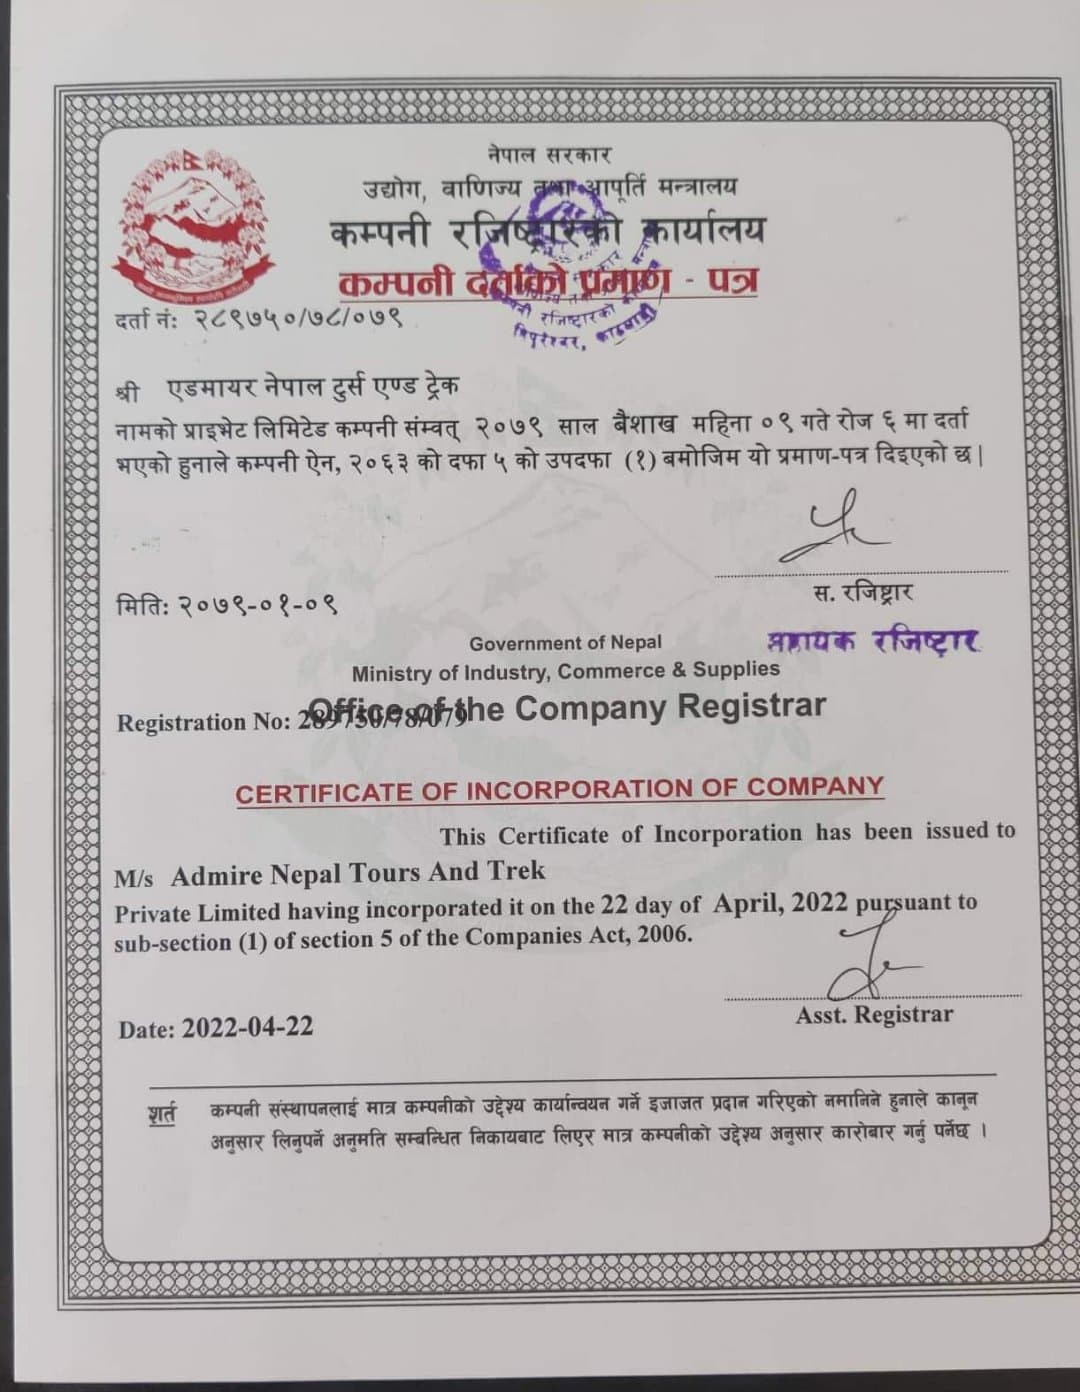 Company Register certificate